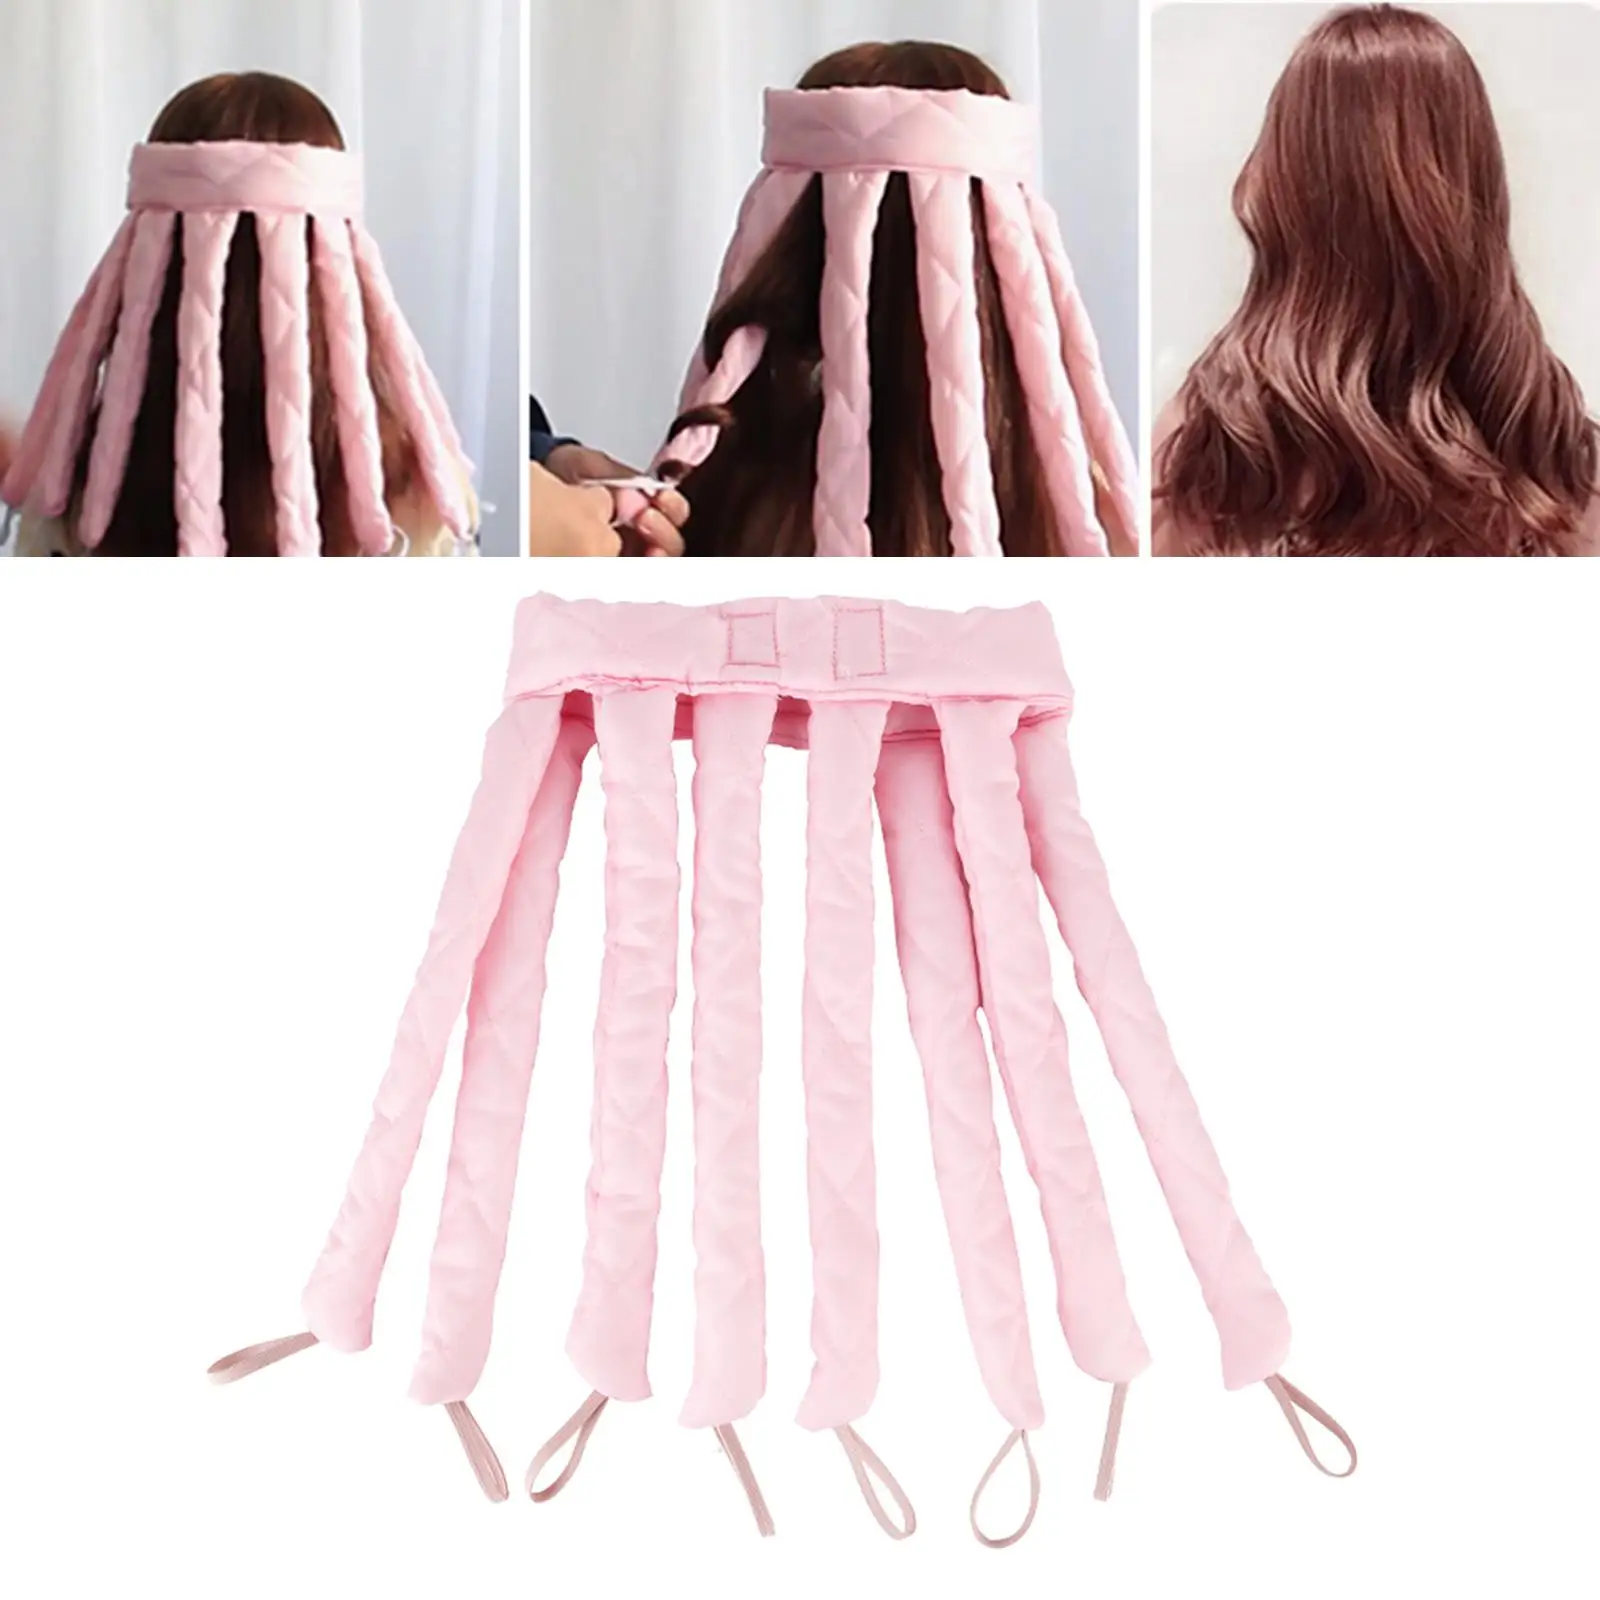  Curlers Hair Styling Tool Sleep Overnight Curls Non-Damaging Hair No Heat Curling Rod  Hair Curler Headband Women Girl`S